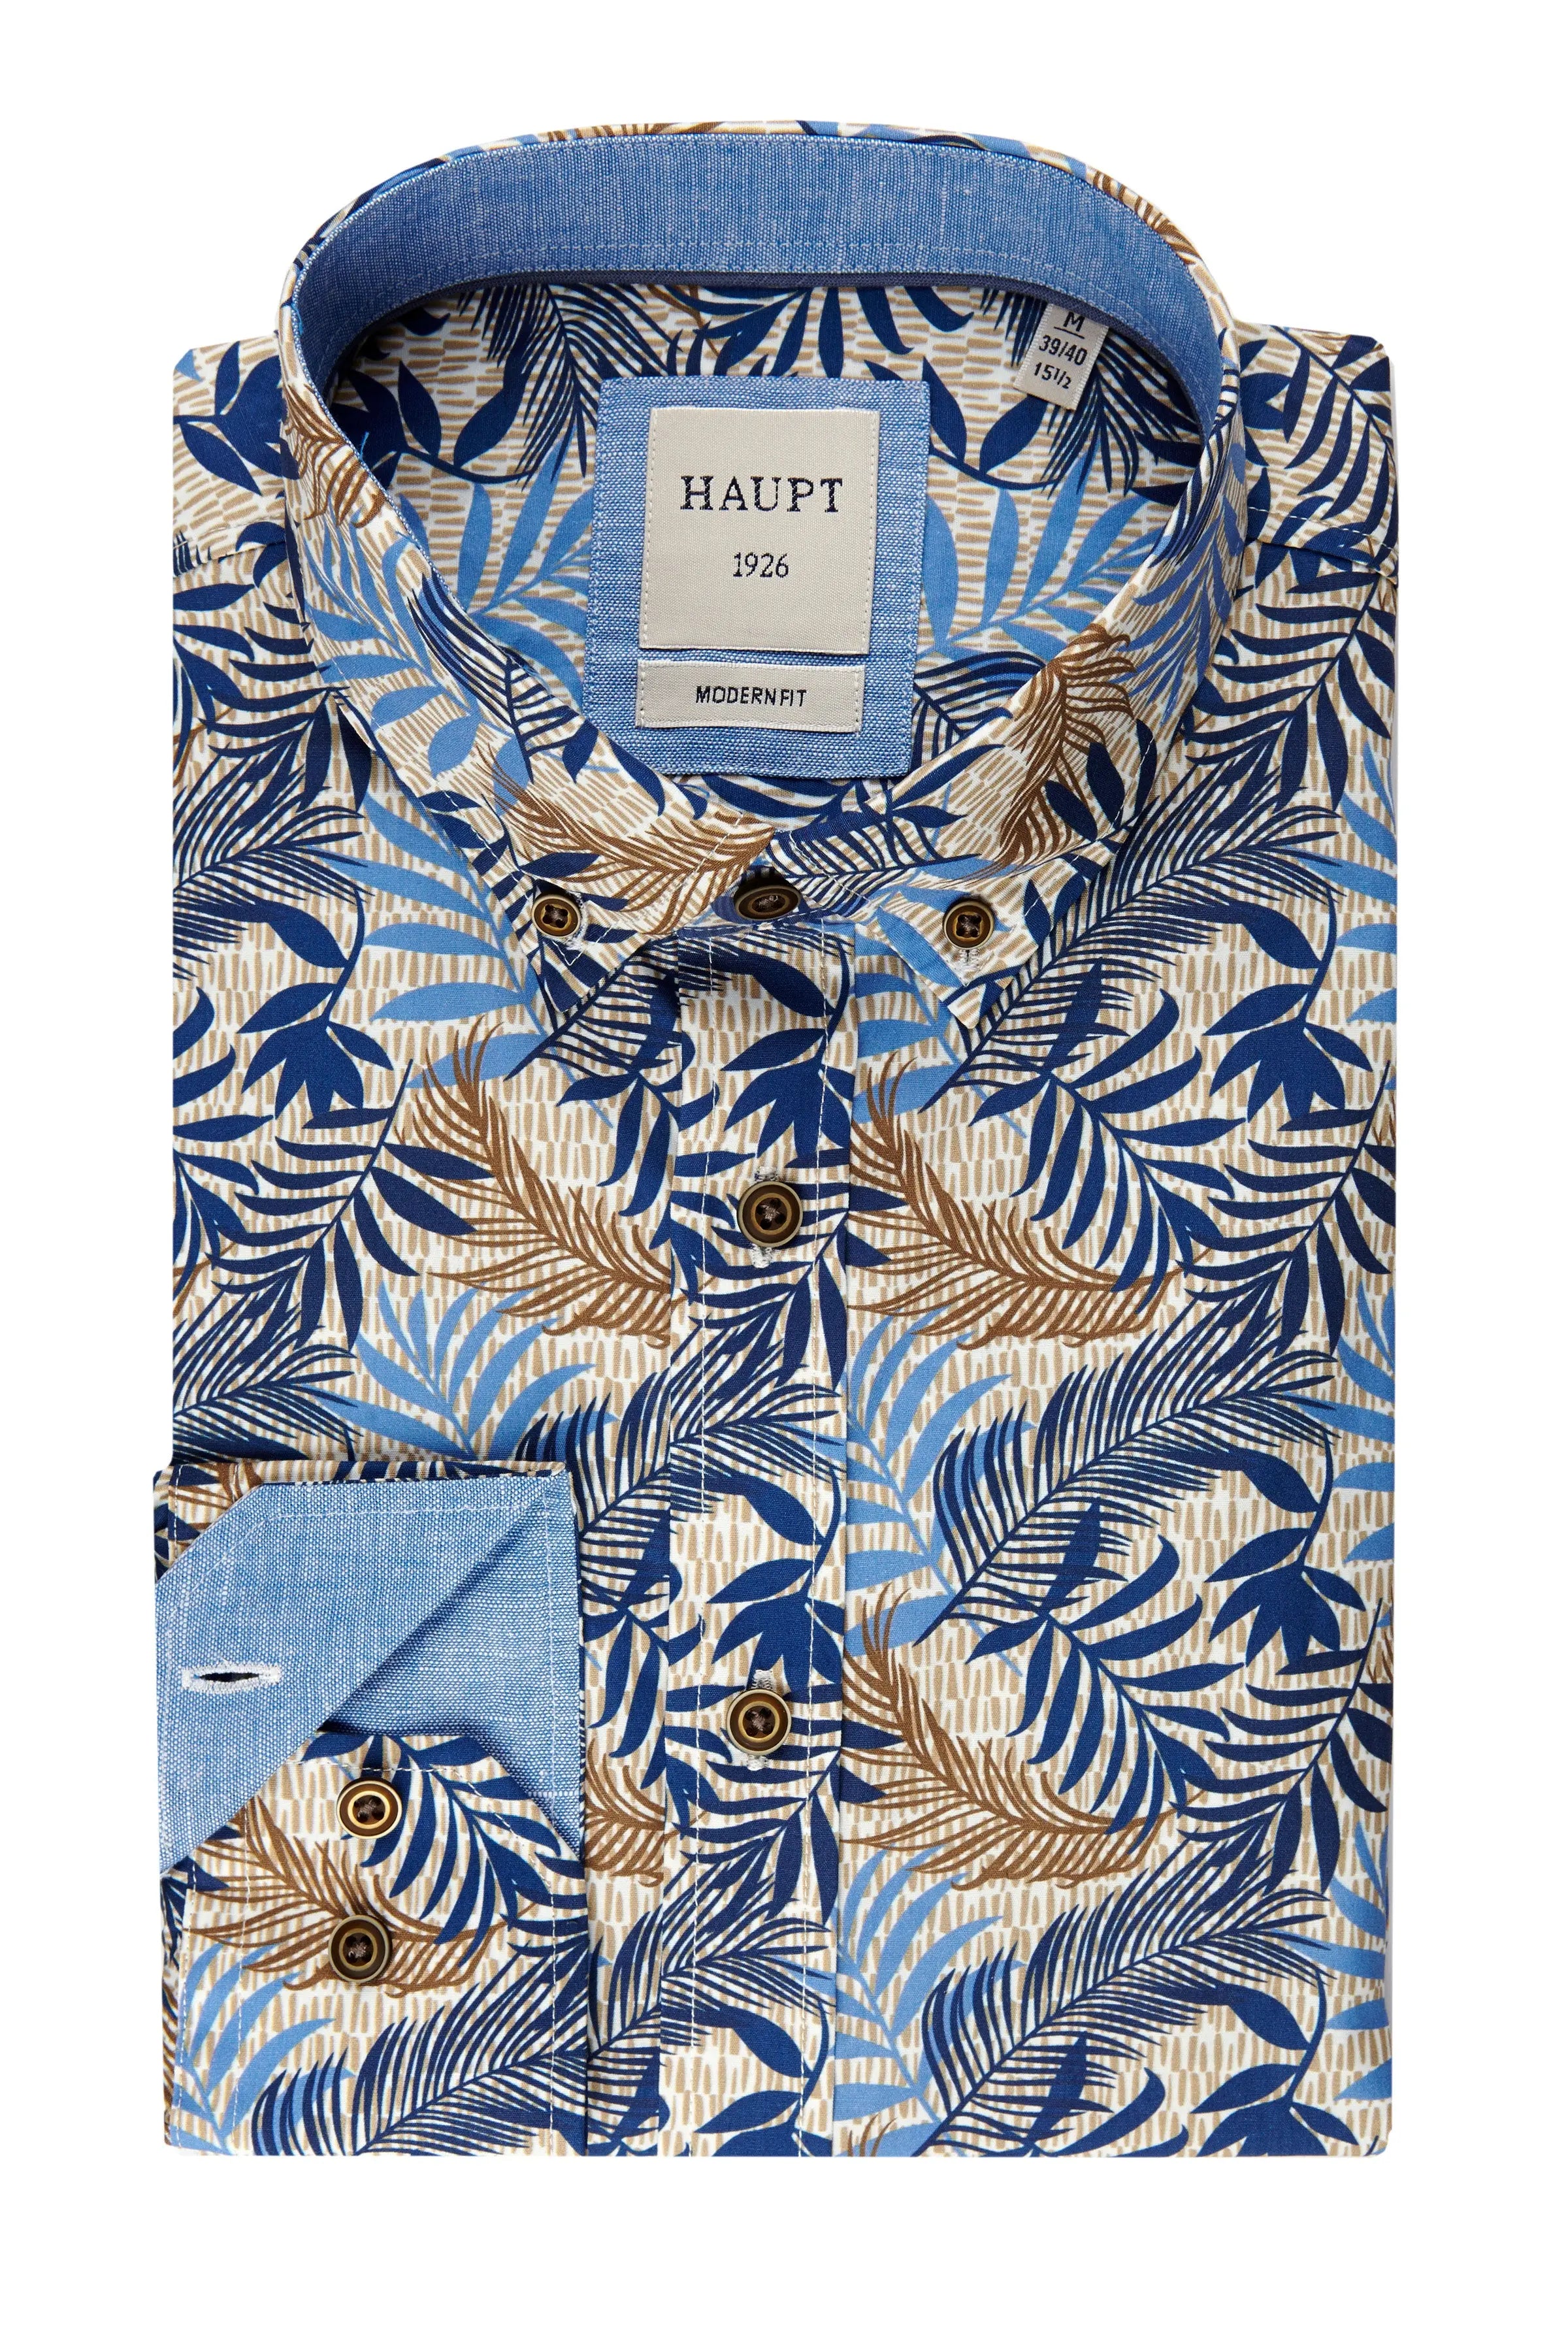 Baumwoll-Herrenhemd sand print Haupt